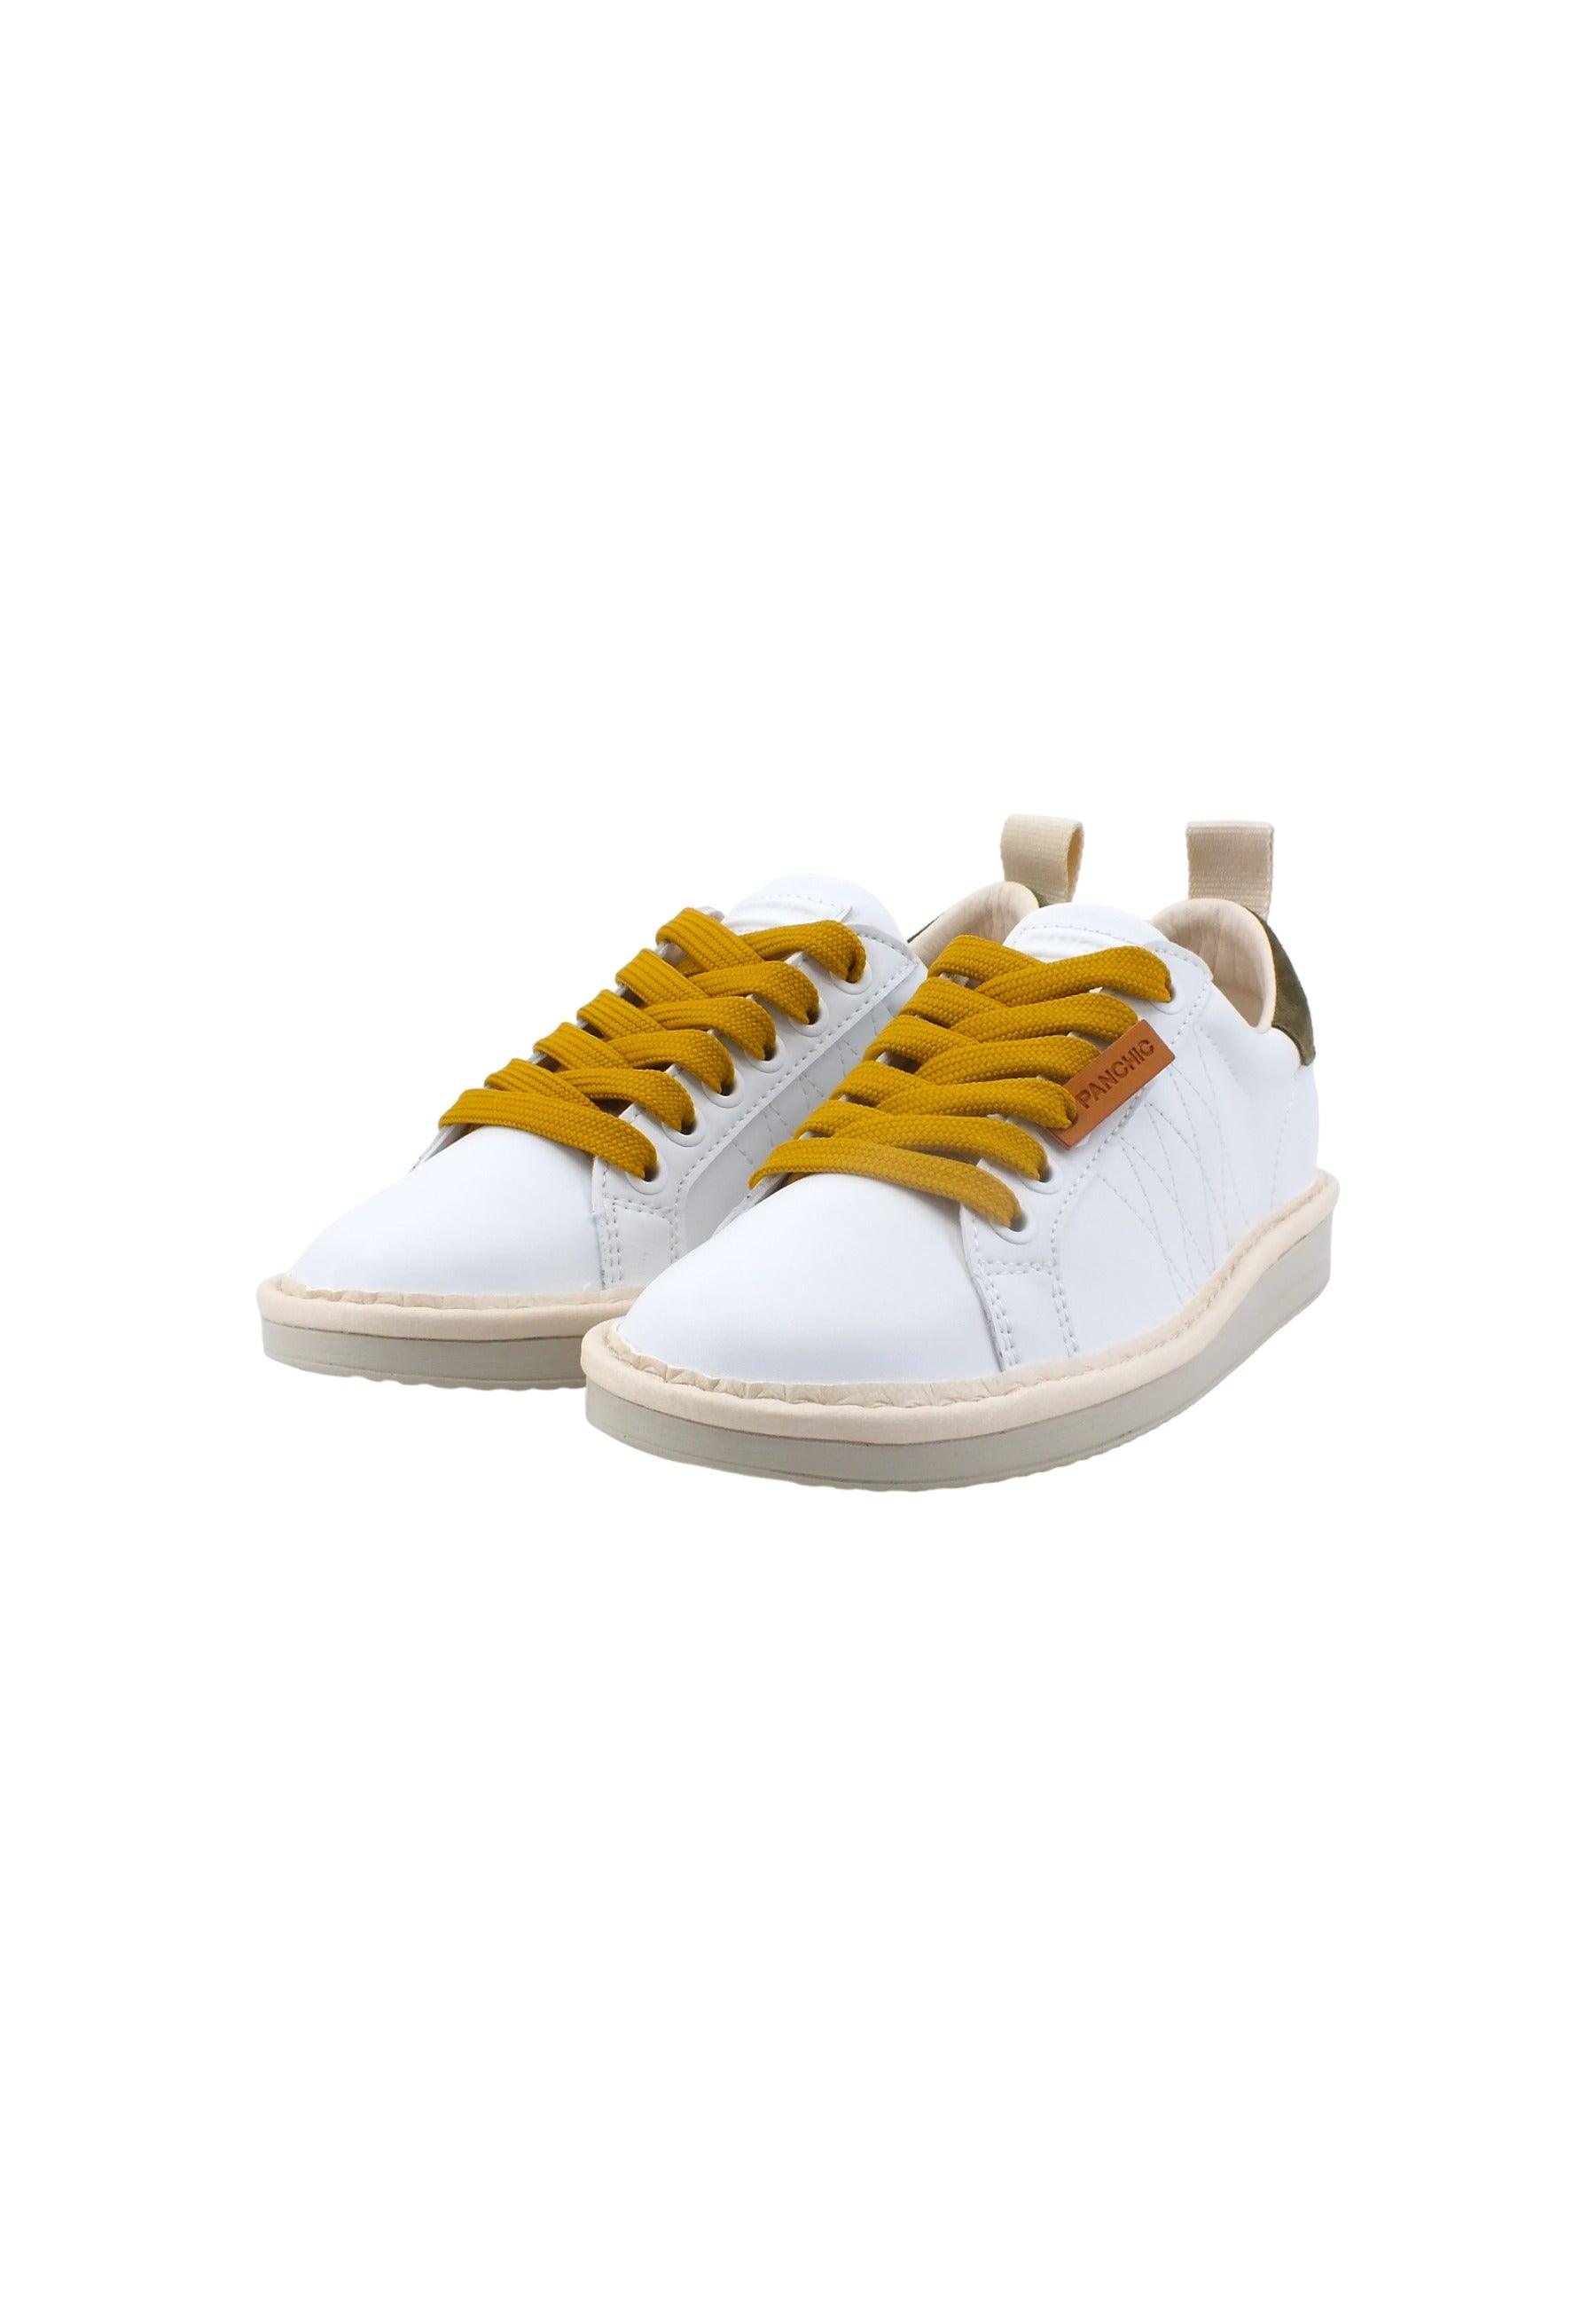 PAN CHIC Sneaker Bambino White Sage YellowP01K00200243004 - Sandrini Calzature e Abbigliamento